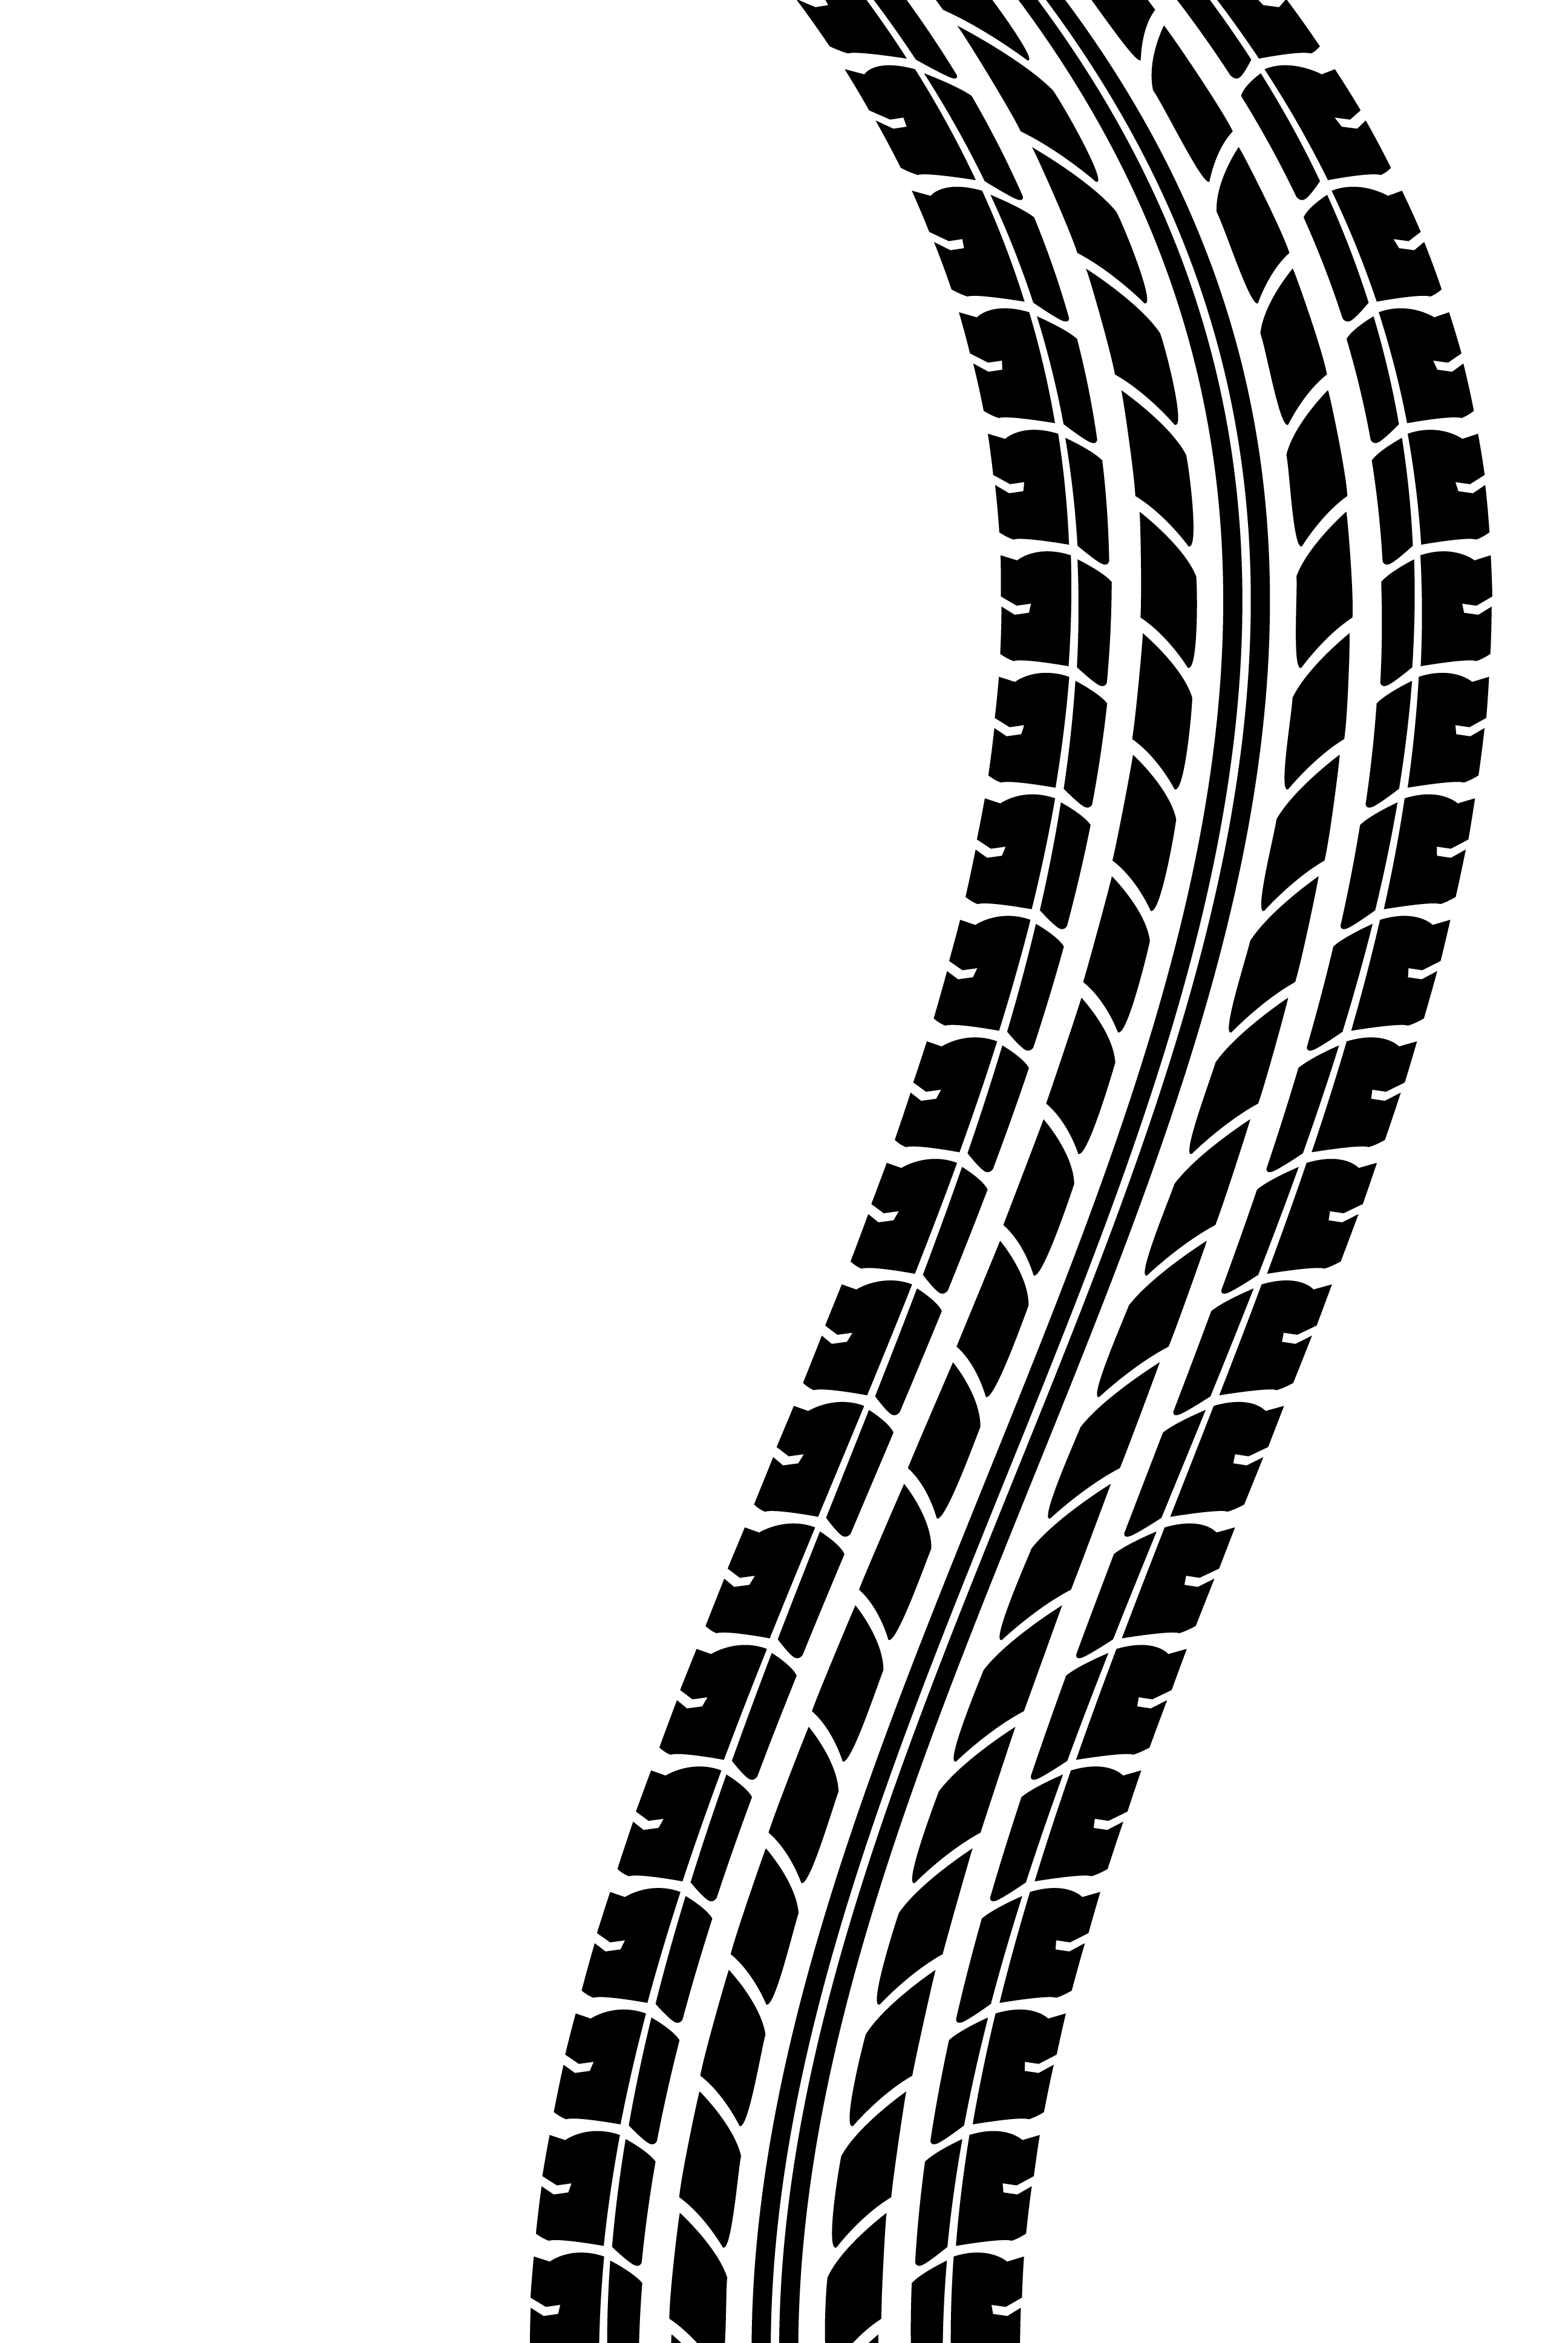 Tire Tracks Clip Art Free